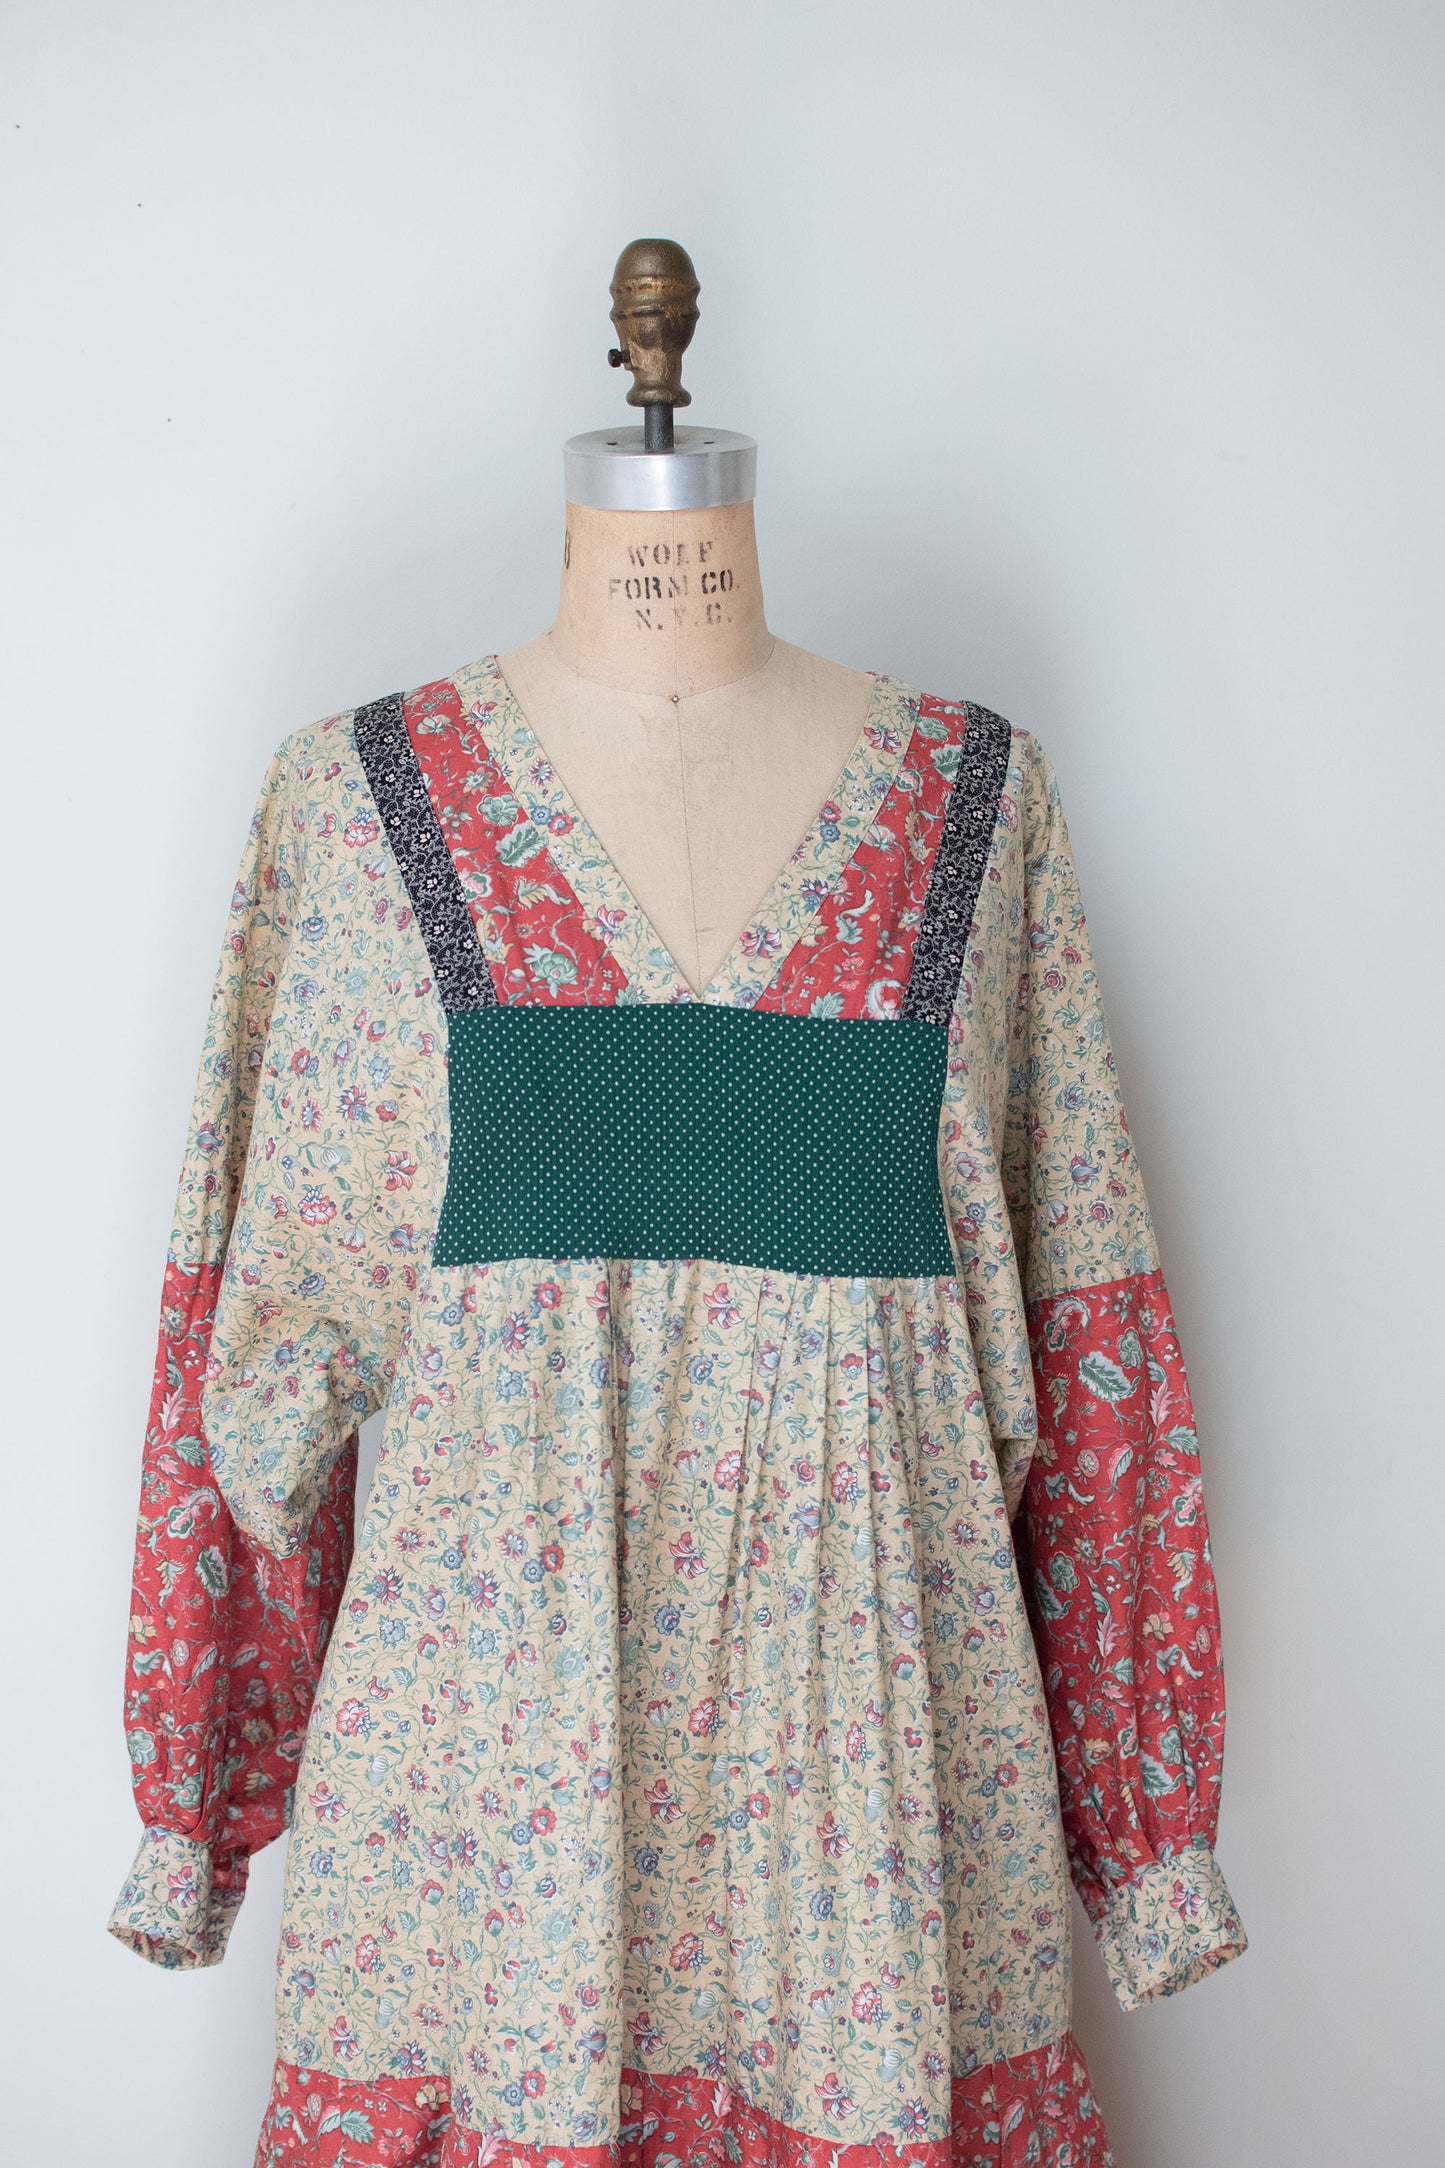 1980s Mixed Floral Print Dress